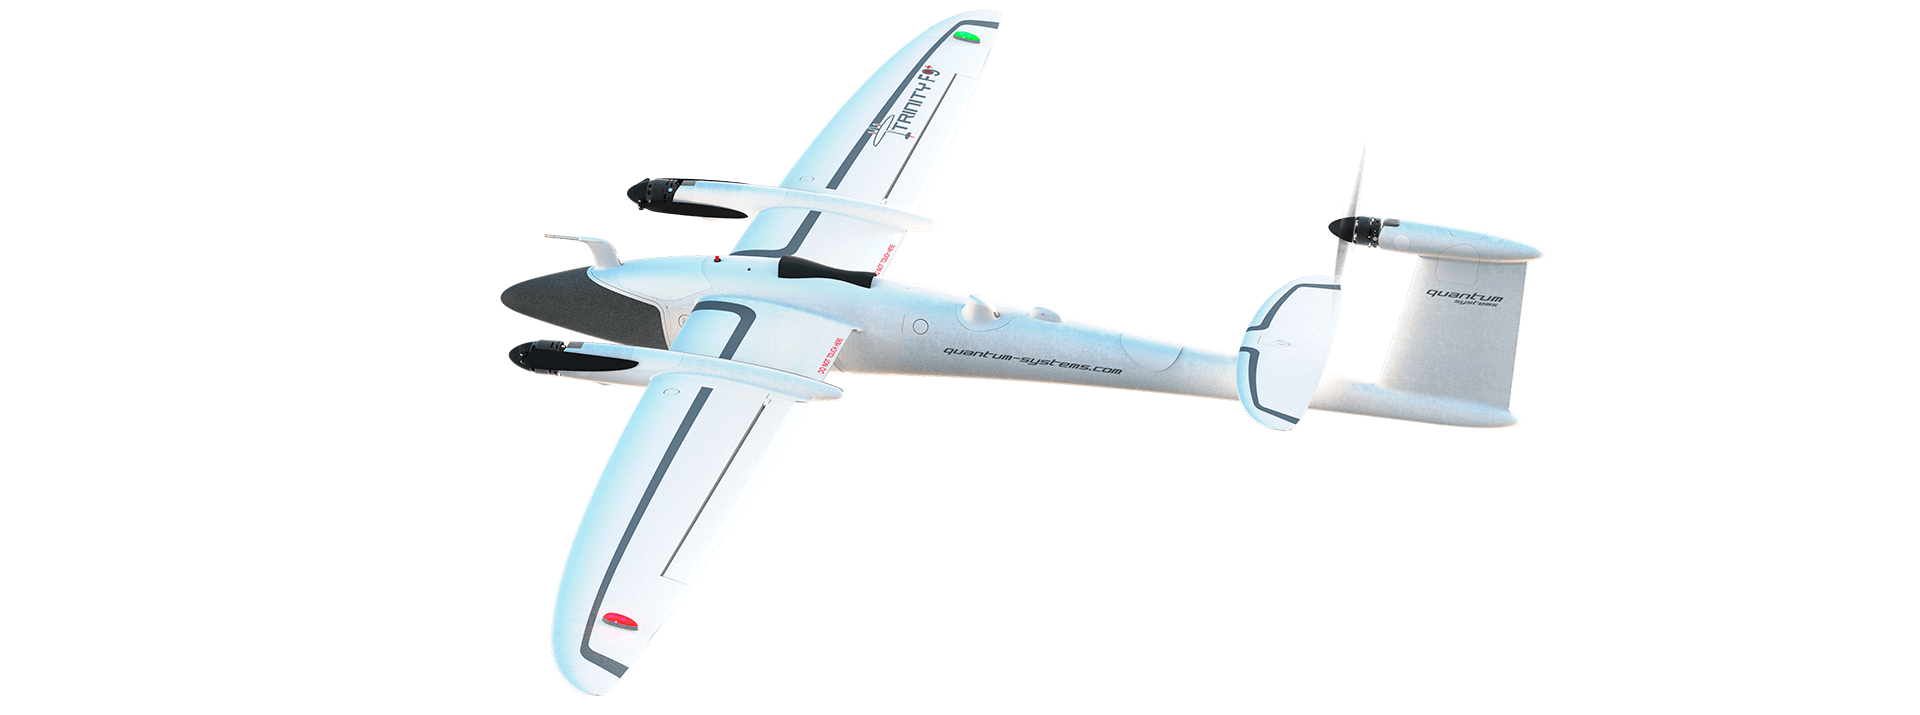 Quantum Systems Trinity F90+ eVTOL Fixed-Wing UAV